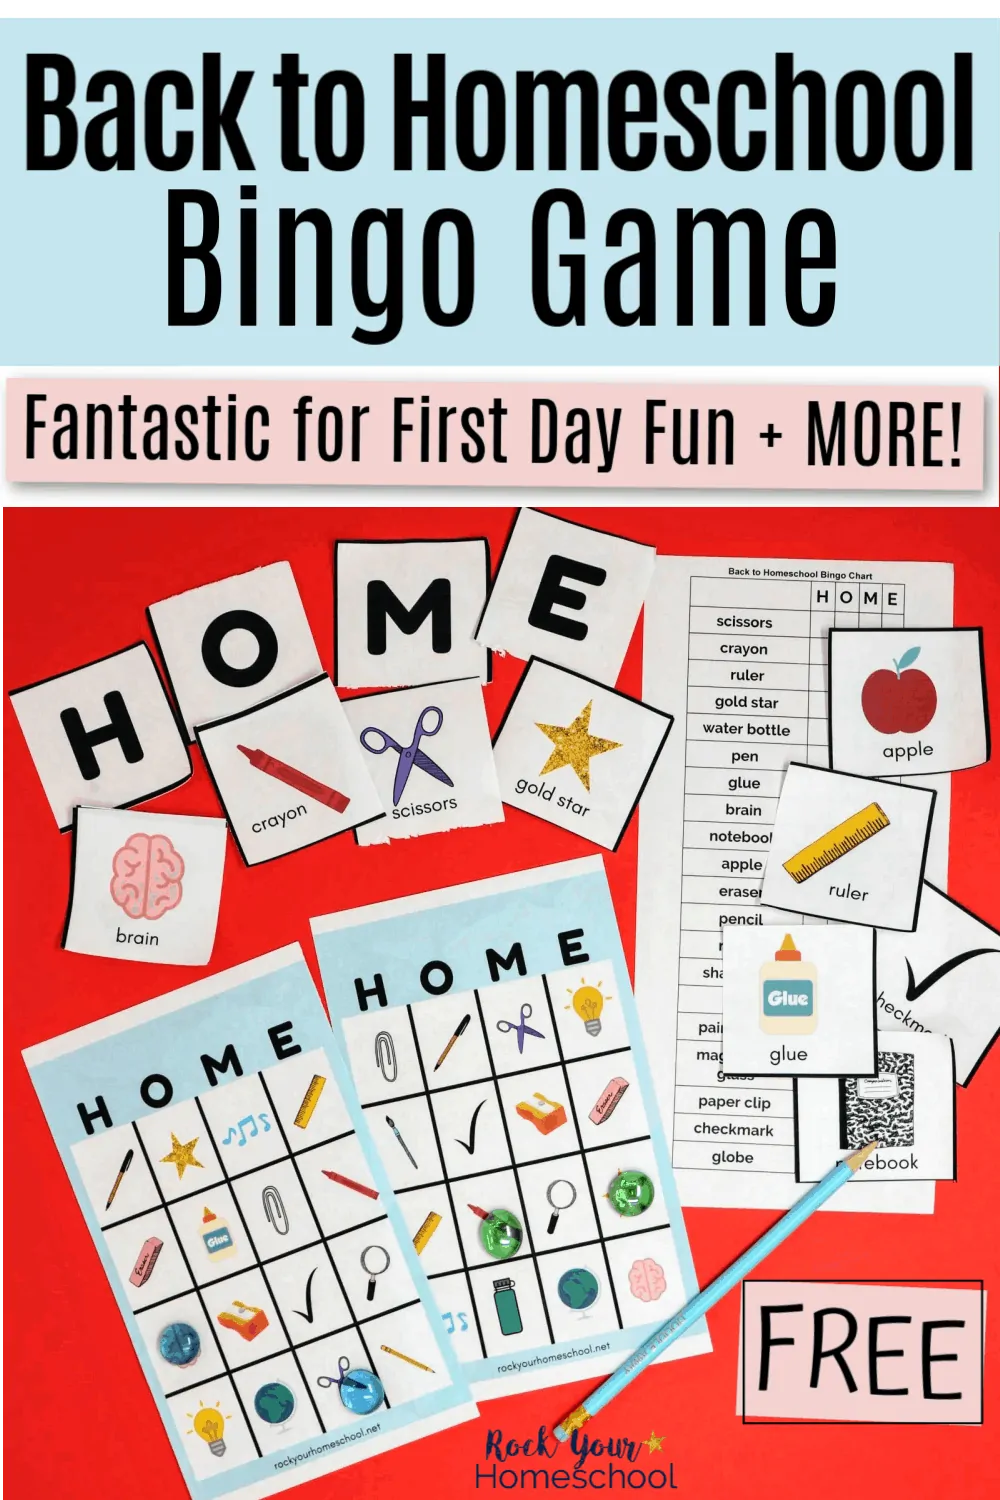 Free Back to Homeschool Bingo Game for First Day Fun